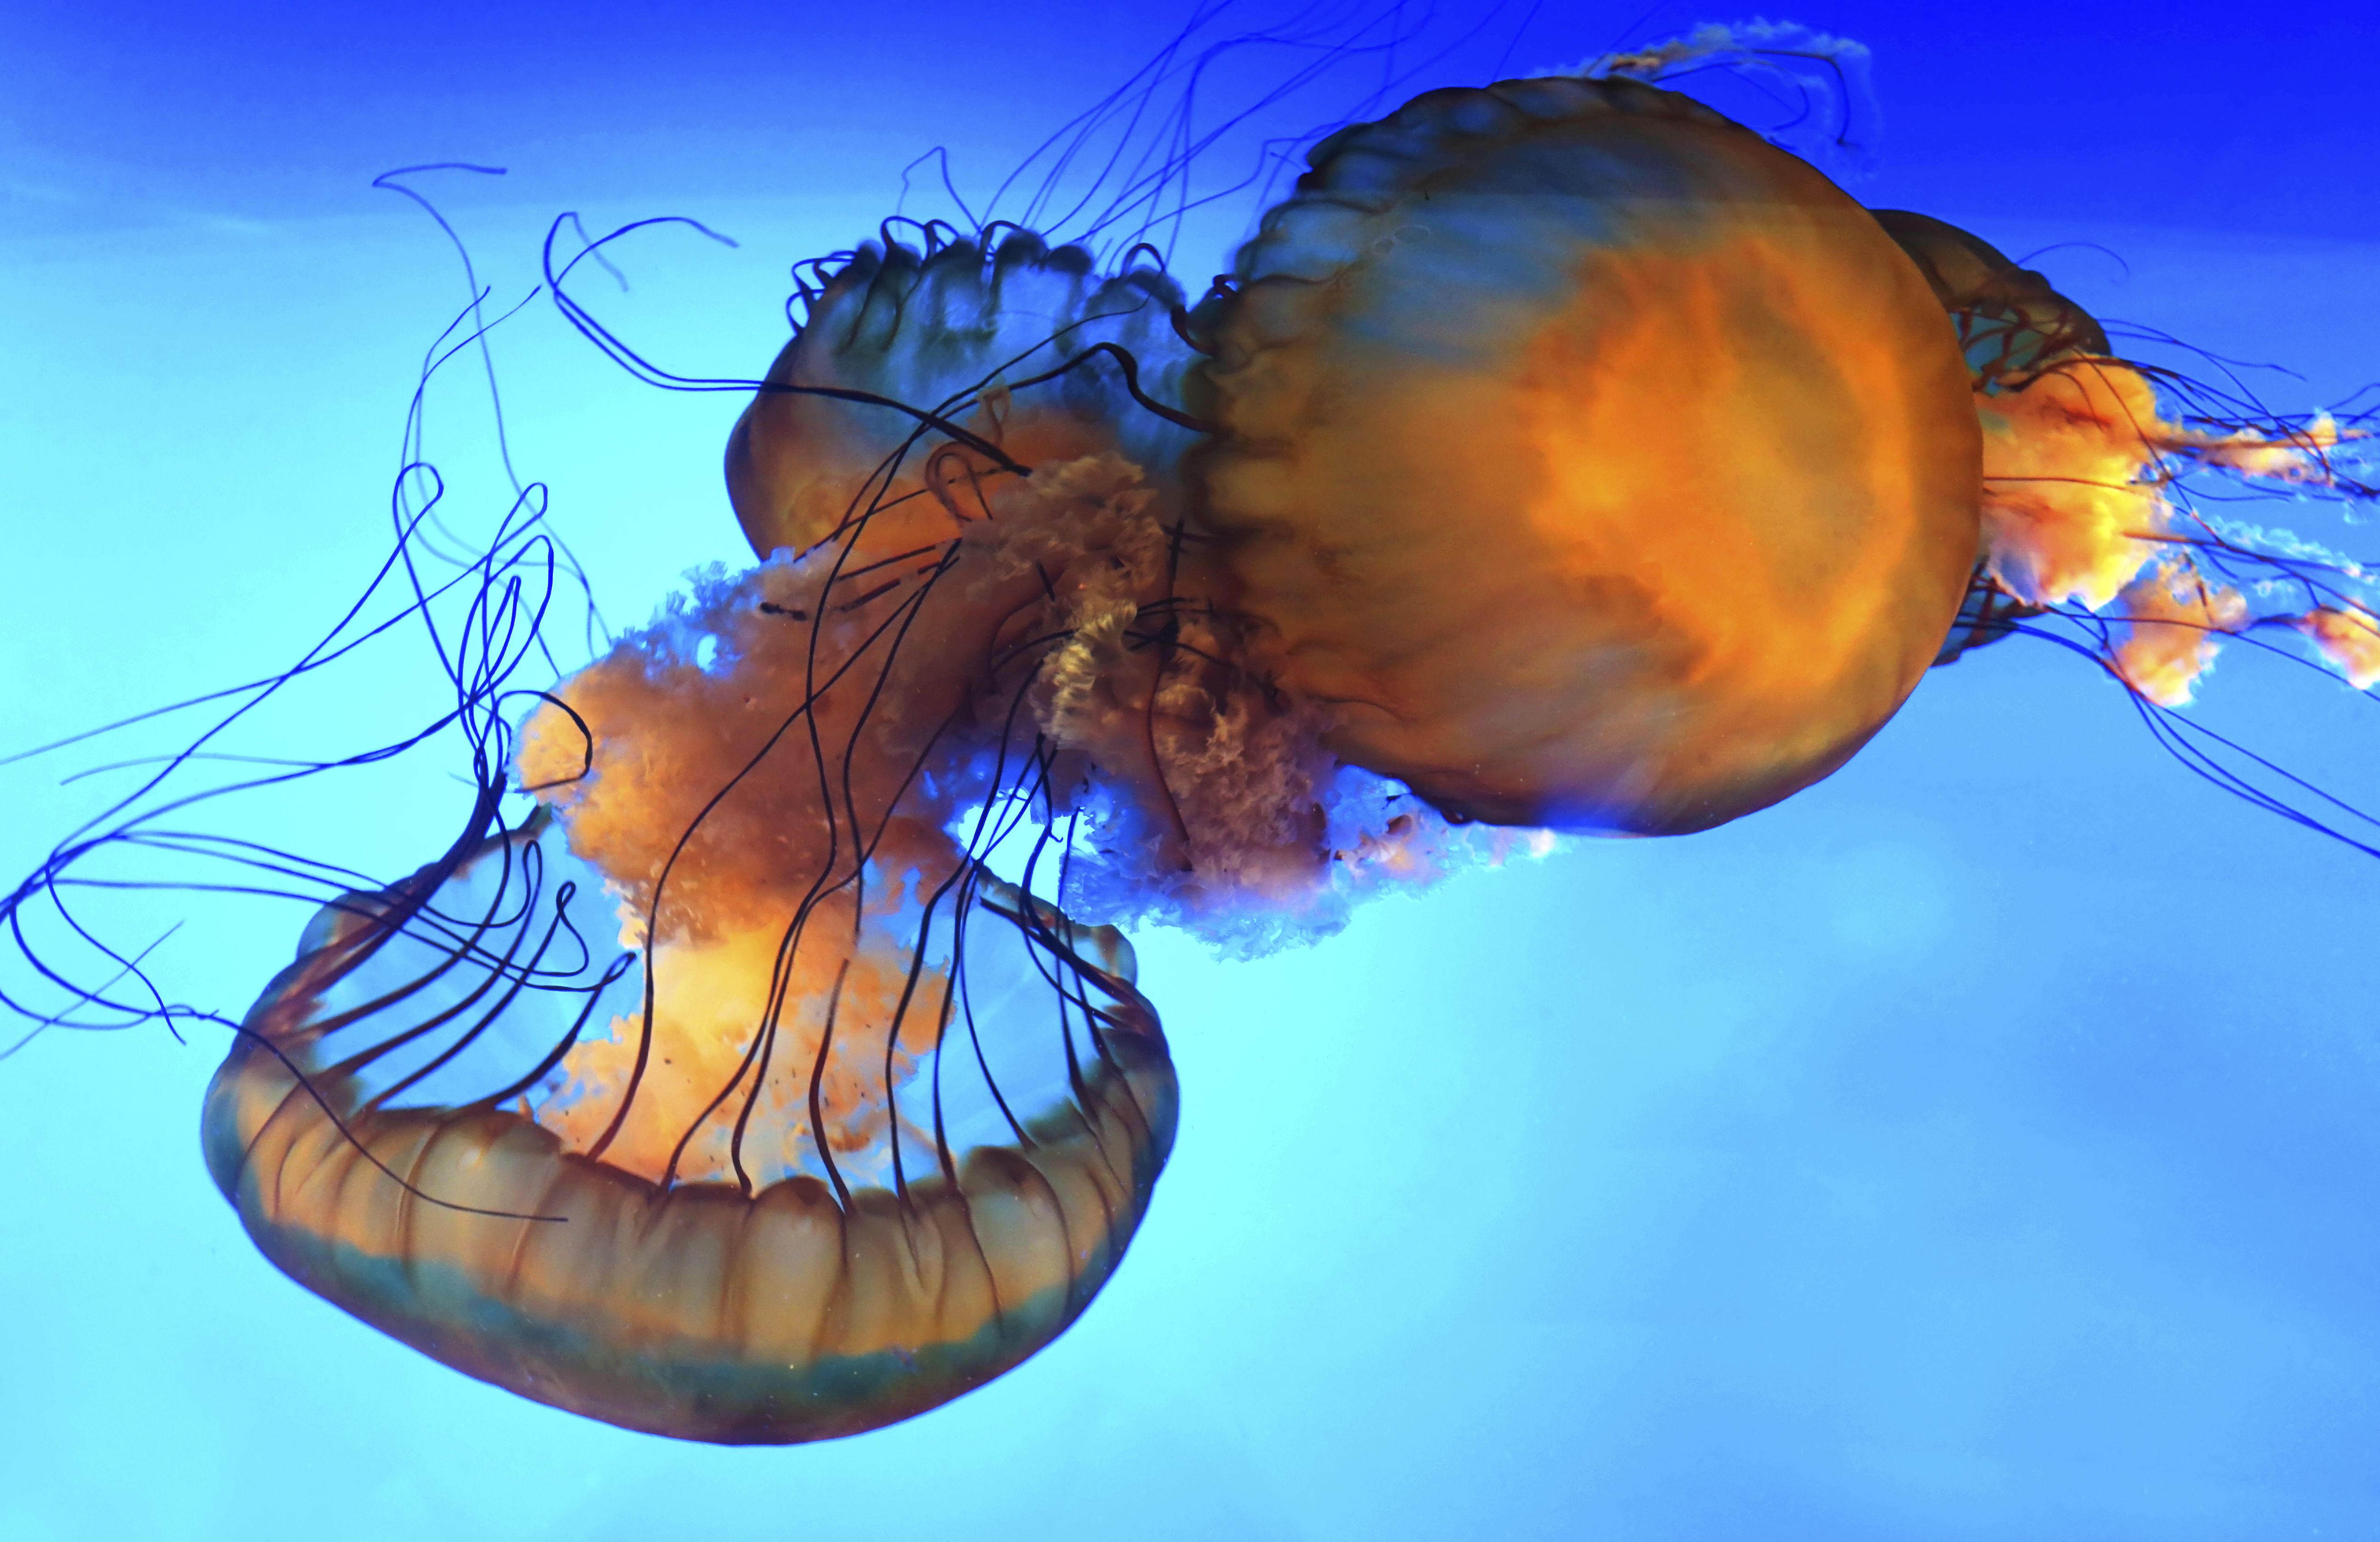 Wallpaper, jellyfish, cnidaria, invertebrate, marine invertebrates, marine biology, fish, organism, sky, computer wallpaper 5184x3359